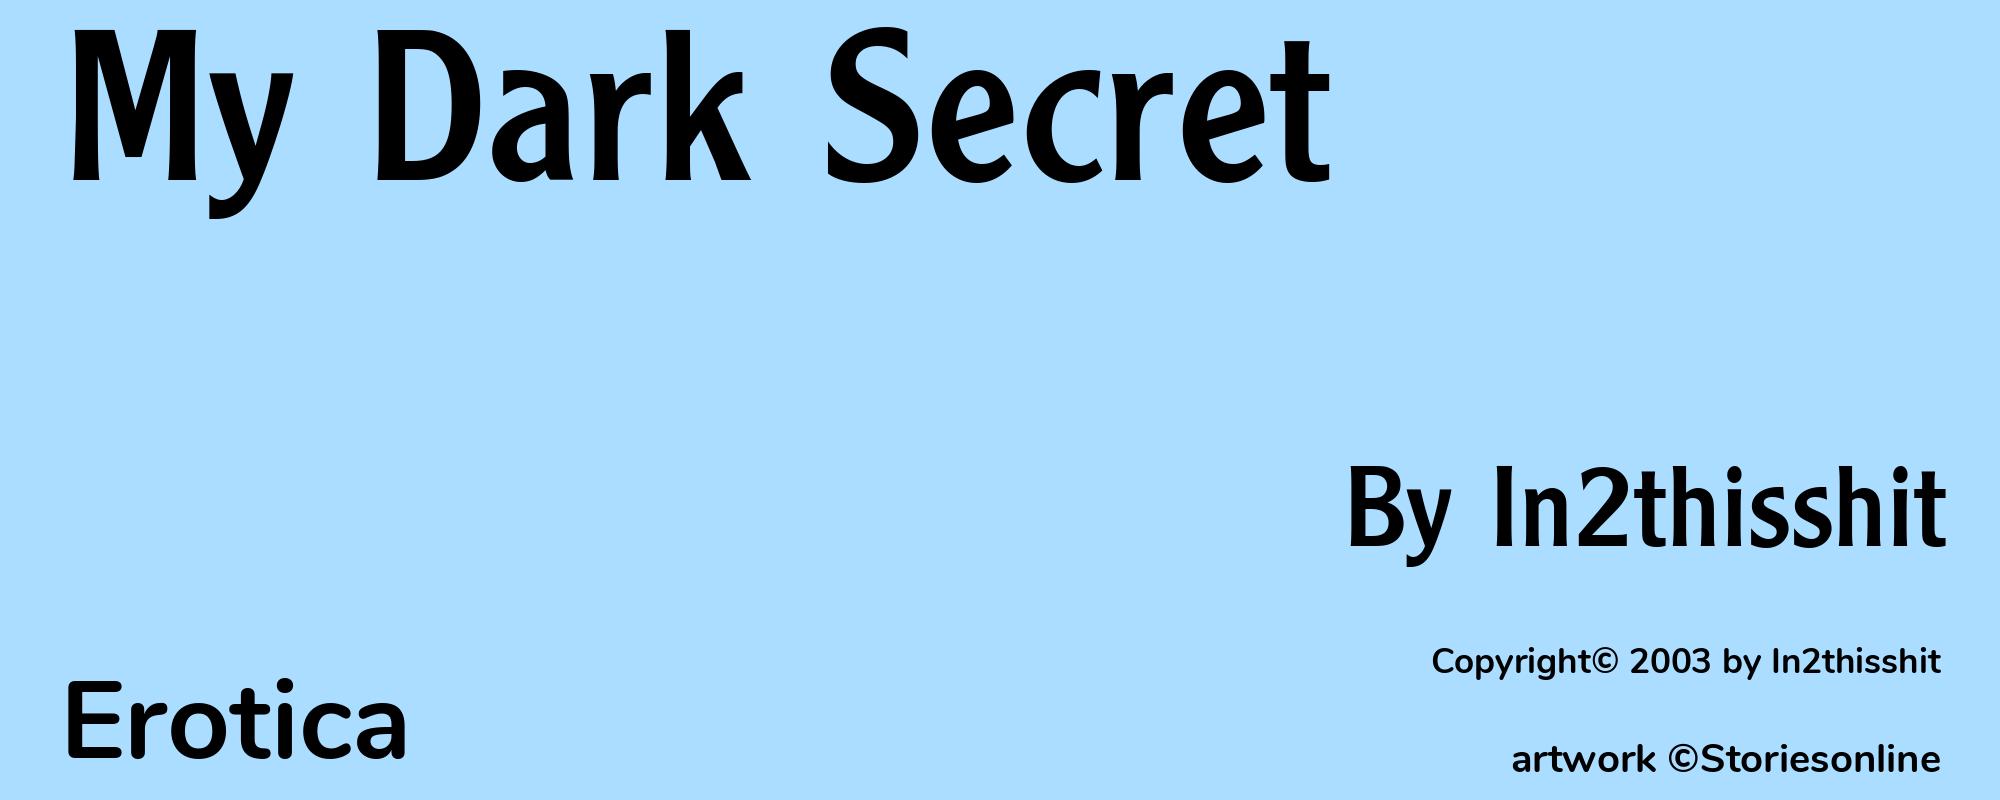 My Dark Secret - Cover